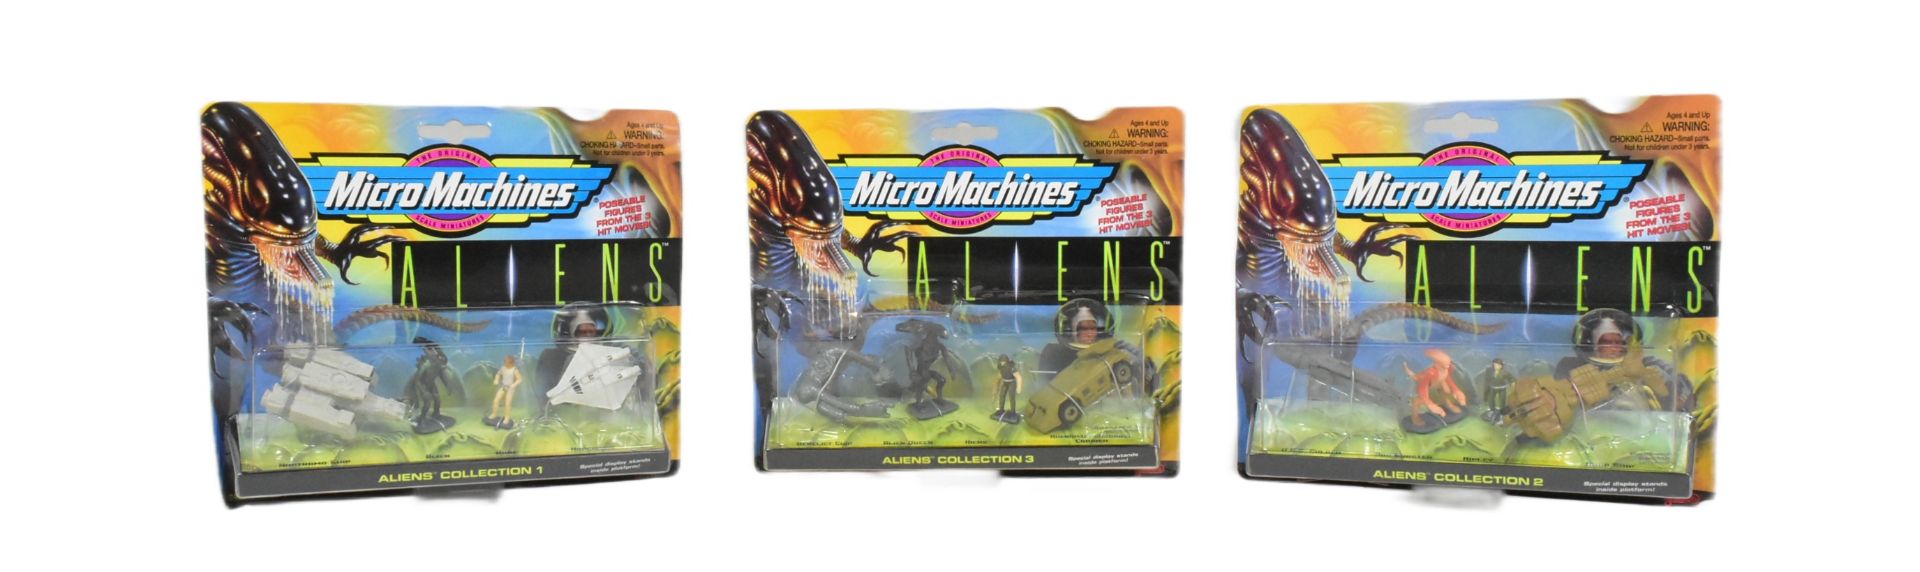 MICRO MACHINES - X3 MICRO MACHINES ALIEN COLLECTION 1, 2 & 3